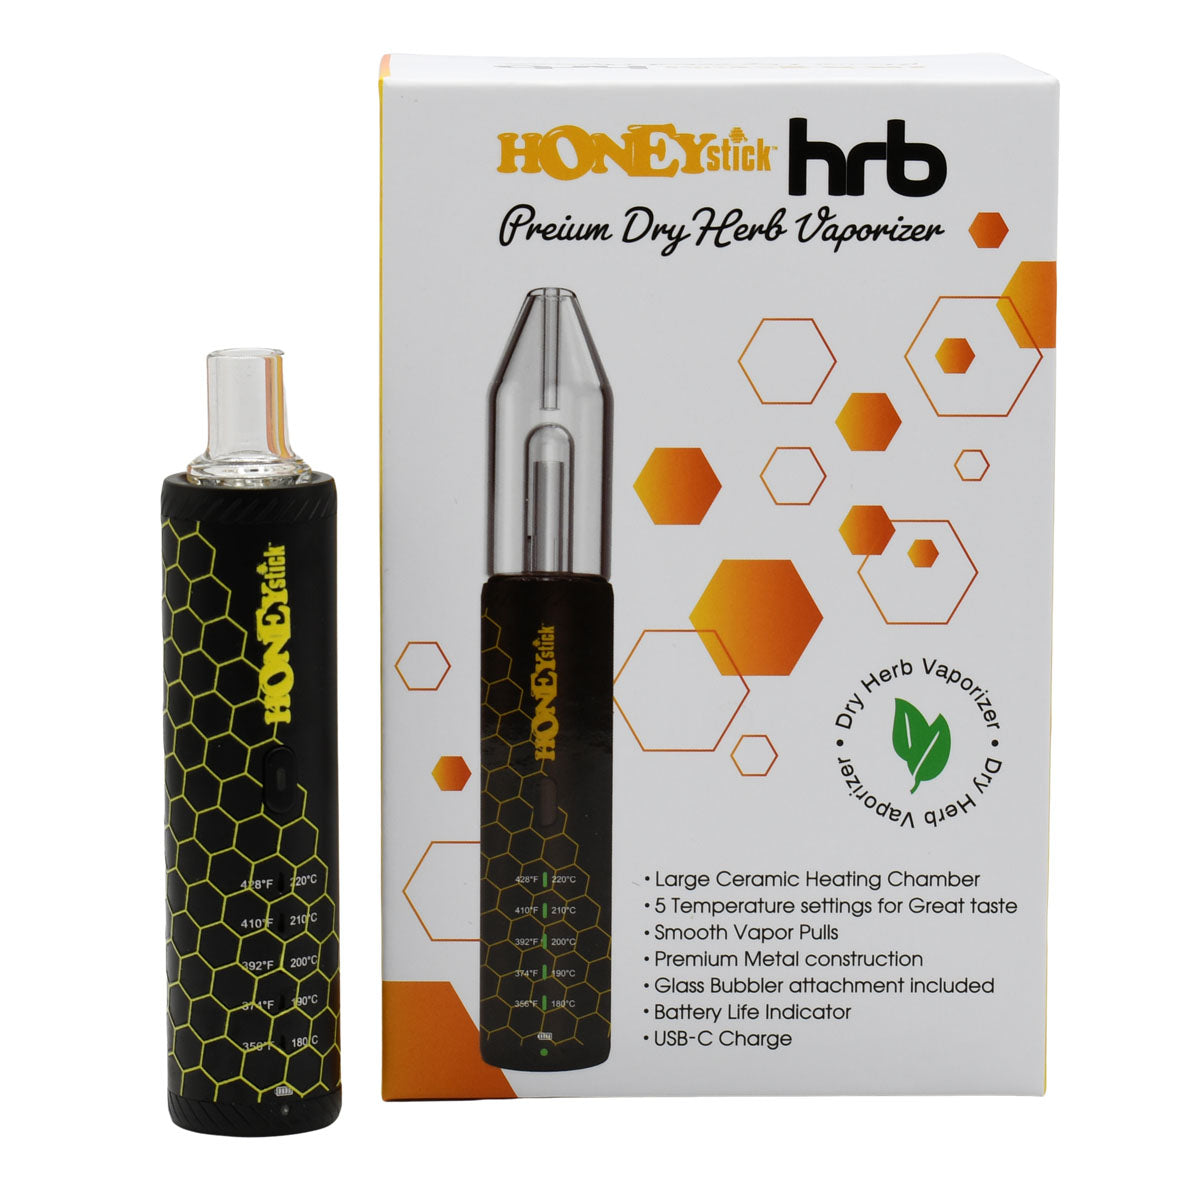 HRB Premium HoneyStick Dry Herb Vaporizer